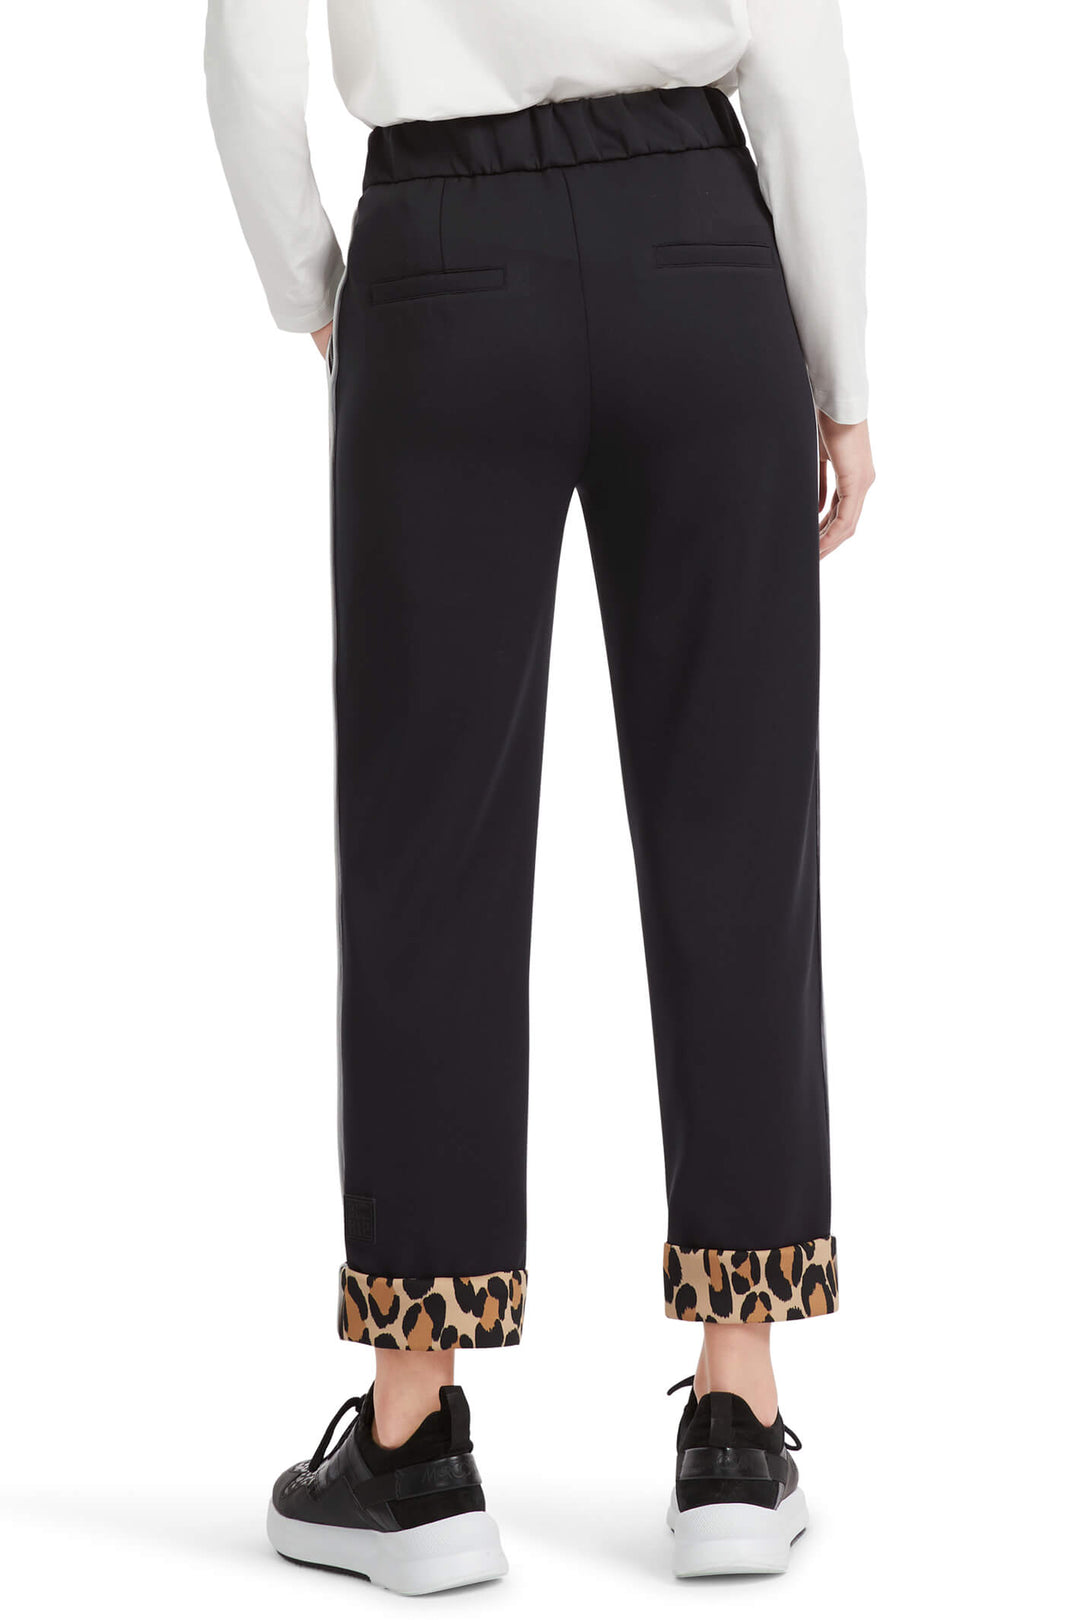 Marc Cain Sports VS 81.38 J22 Resita 900 Black Relaxed Fit Trousers - Olivia Grace Fashion